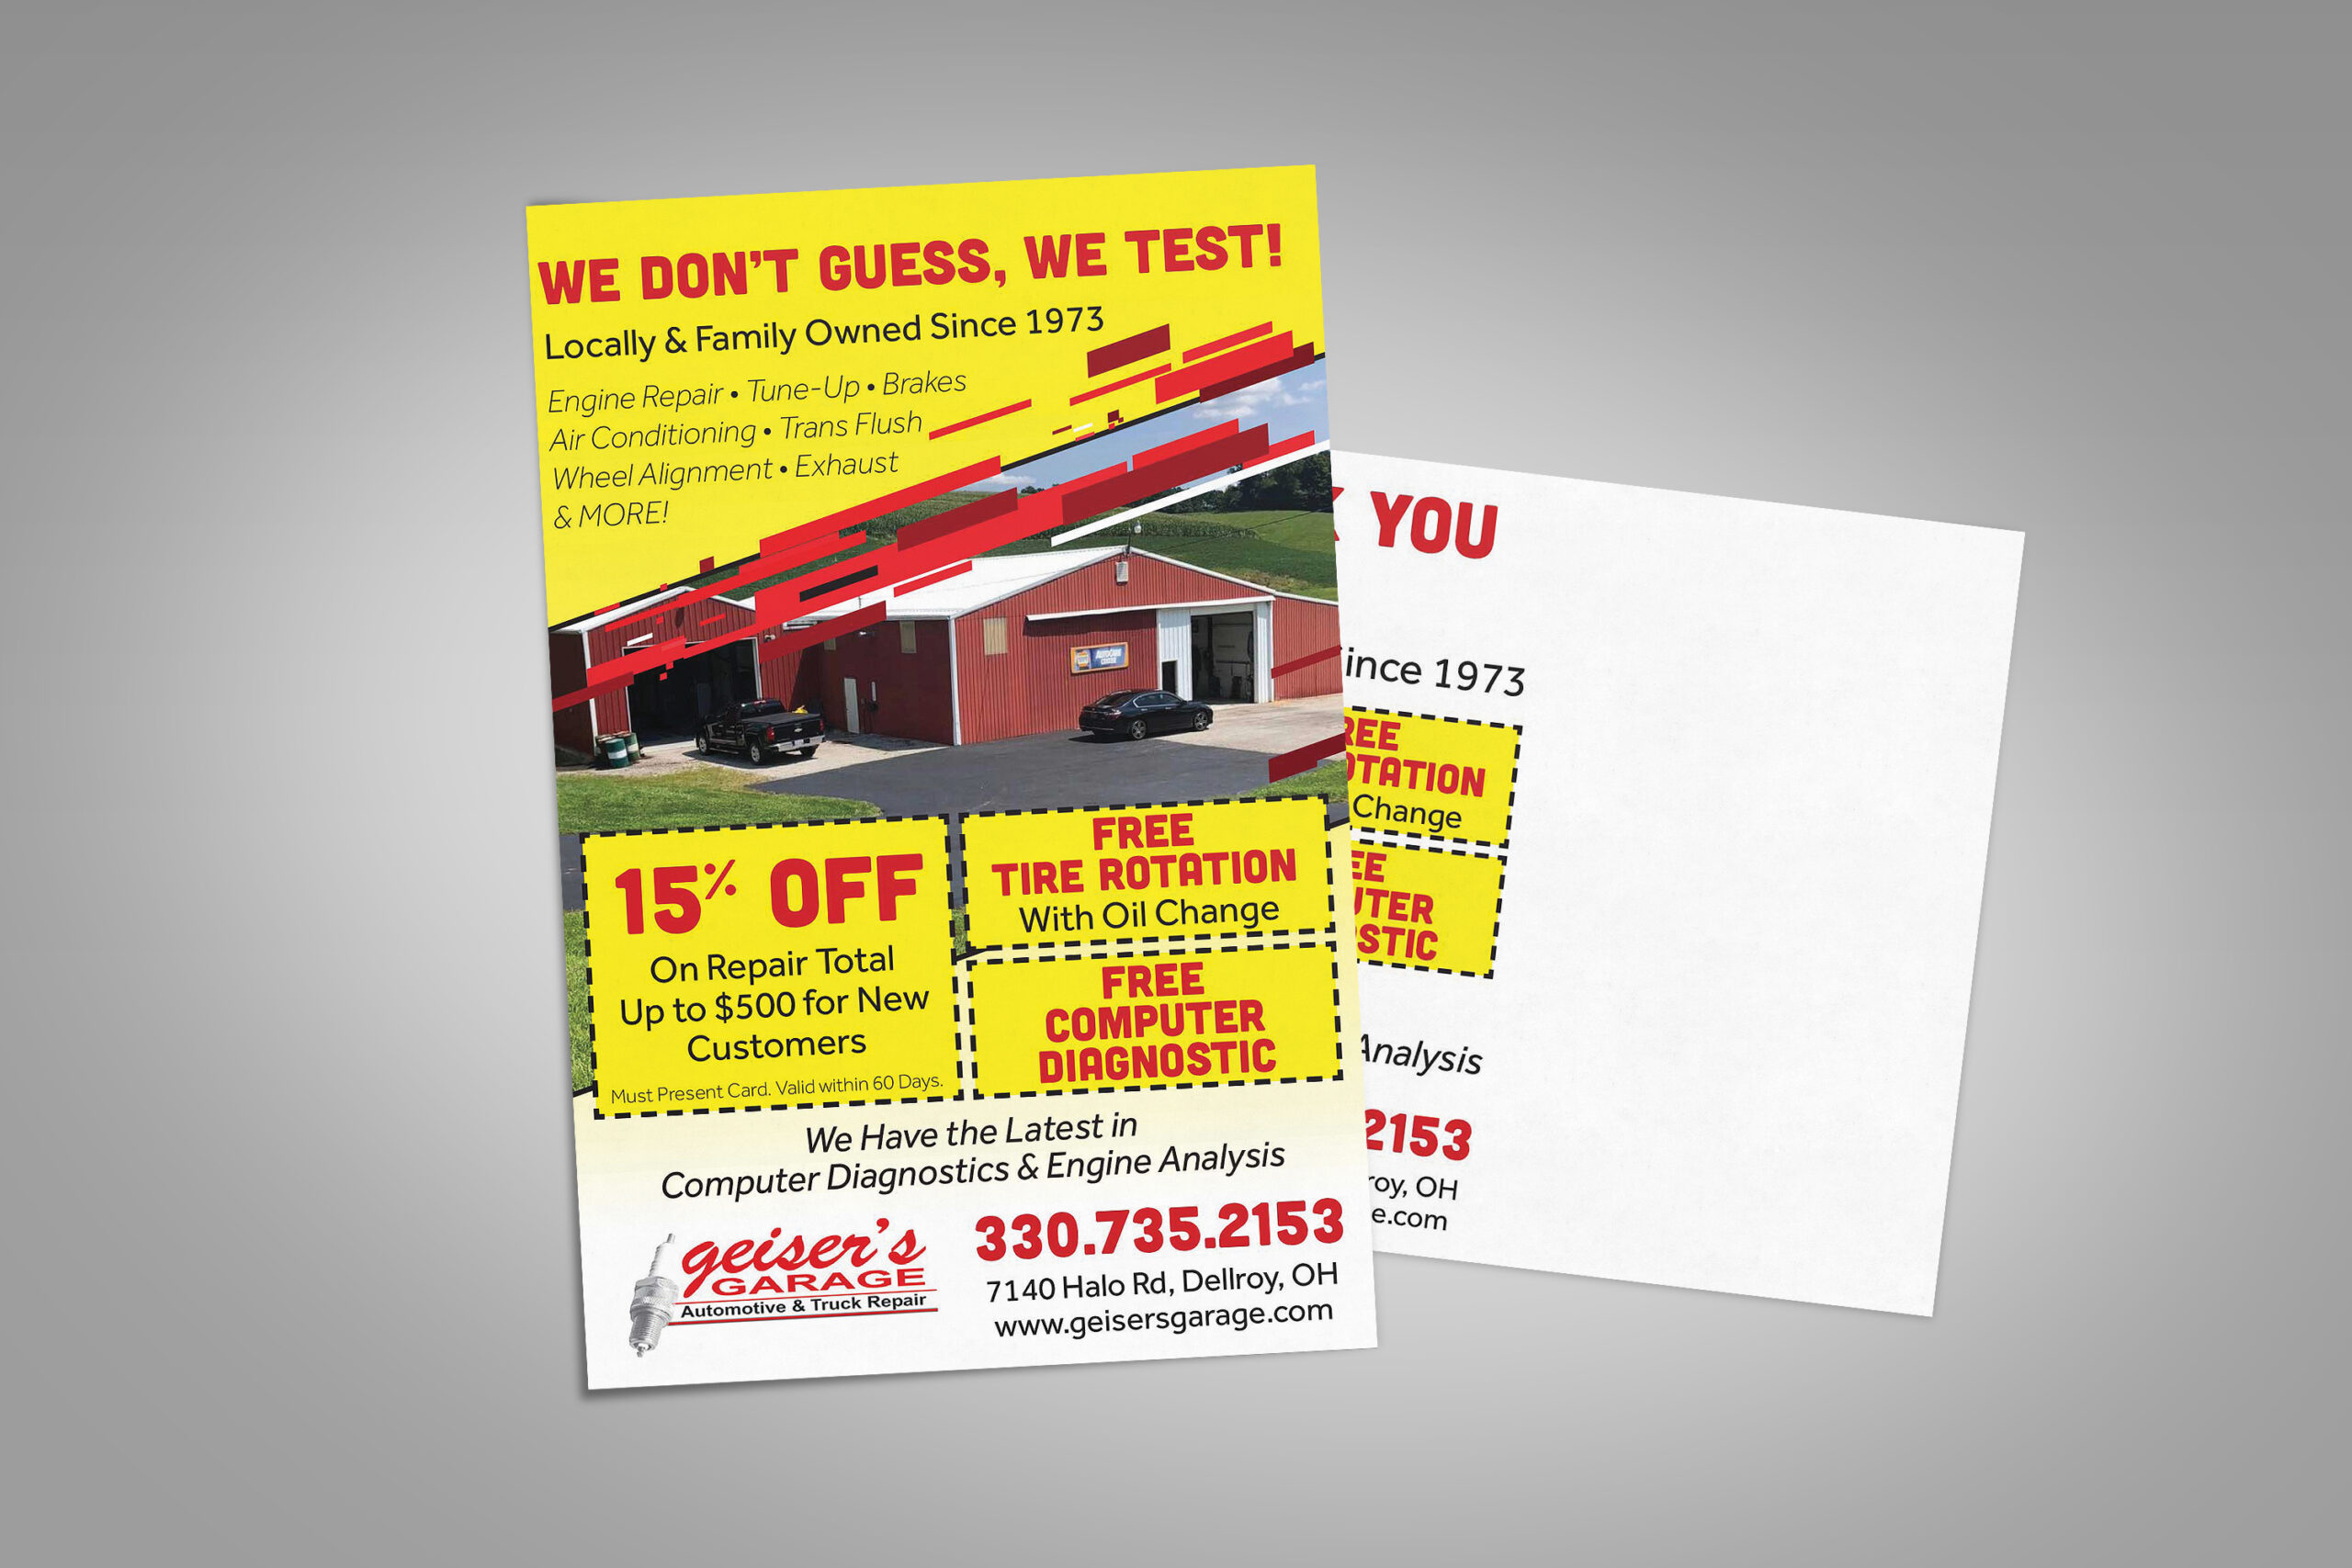 Geisers Garage Print Mail Design - Brand and Web Design Agency